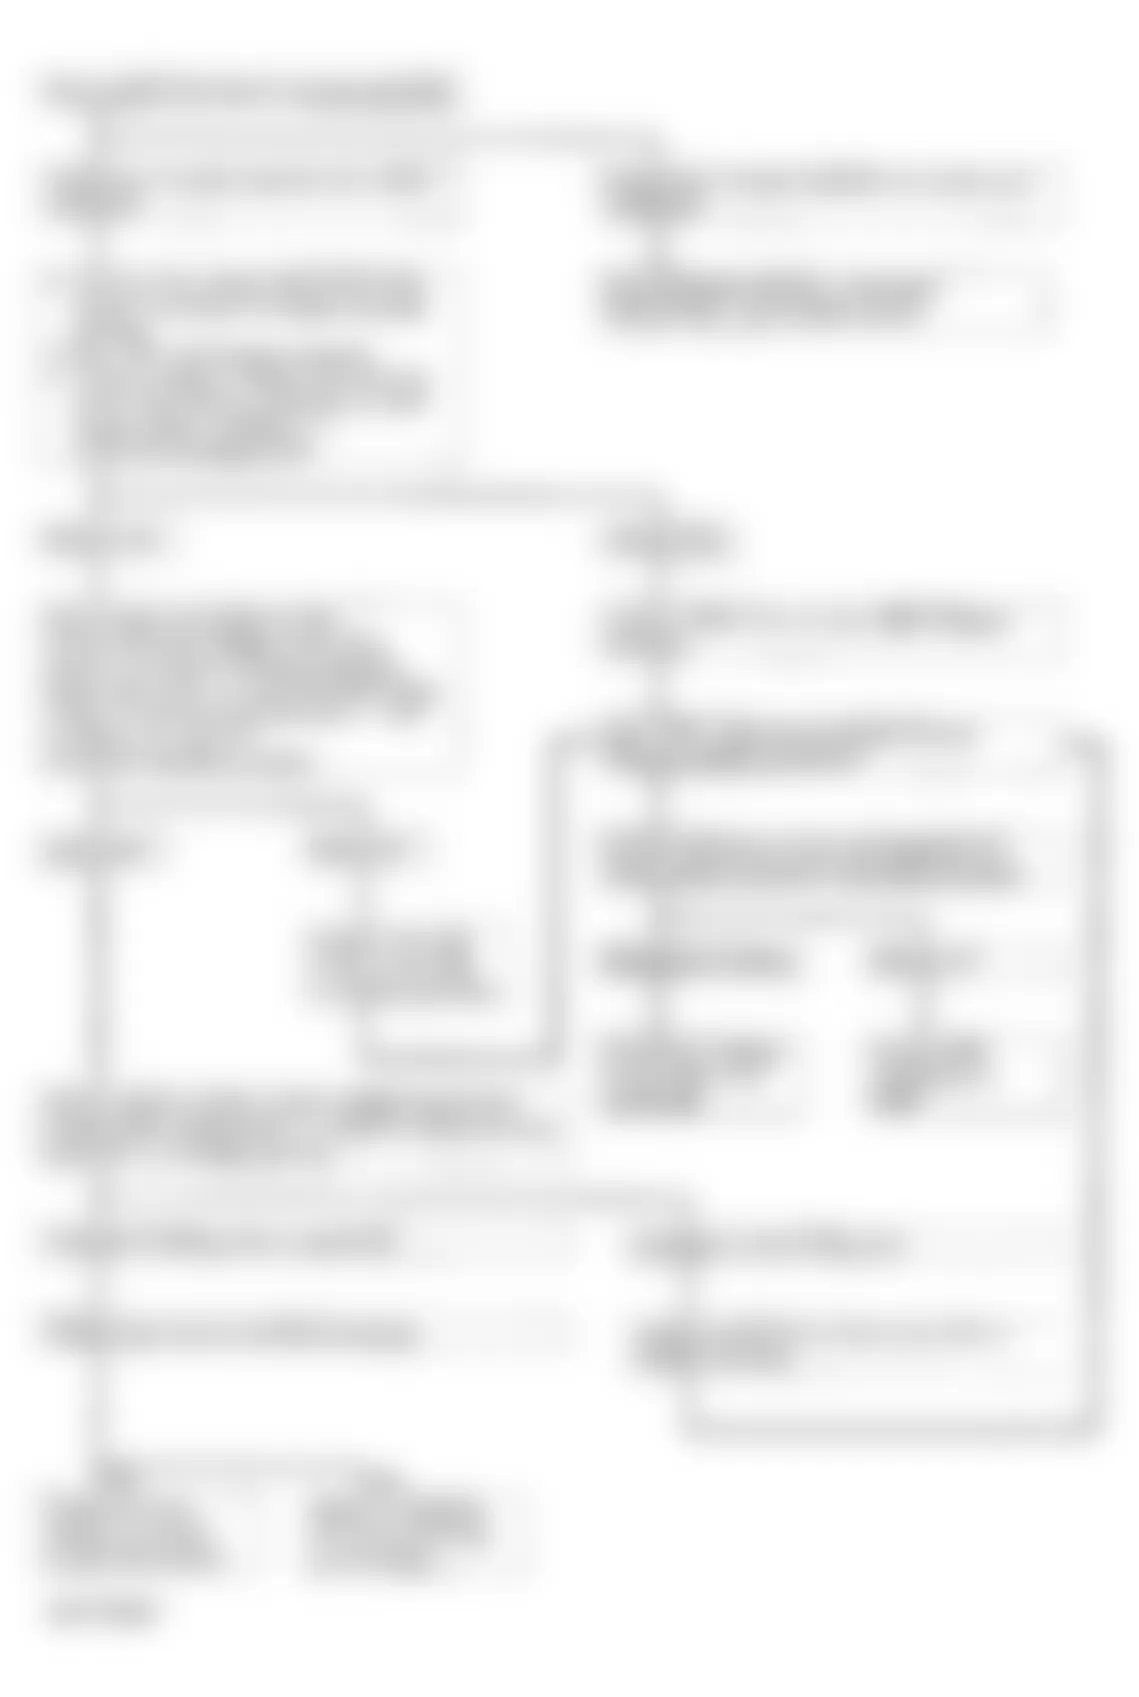 Honda Passport DX 1994 - Component Locations -  Code 61, 62 - Diagnostic Flowchart (2 Of 2)